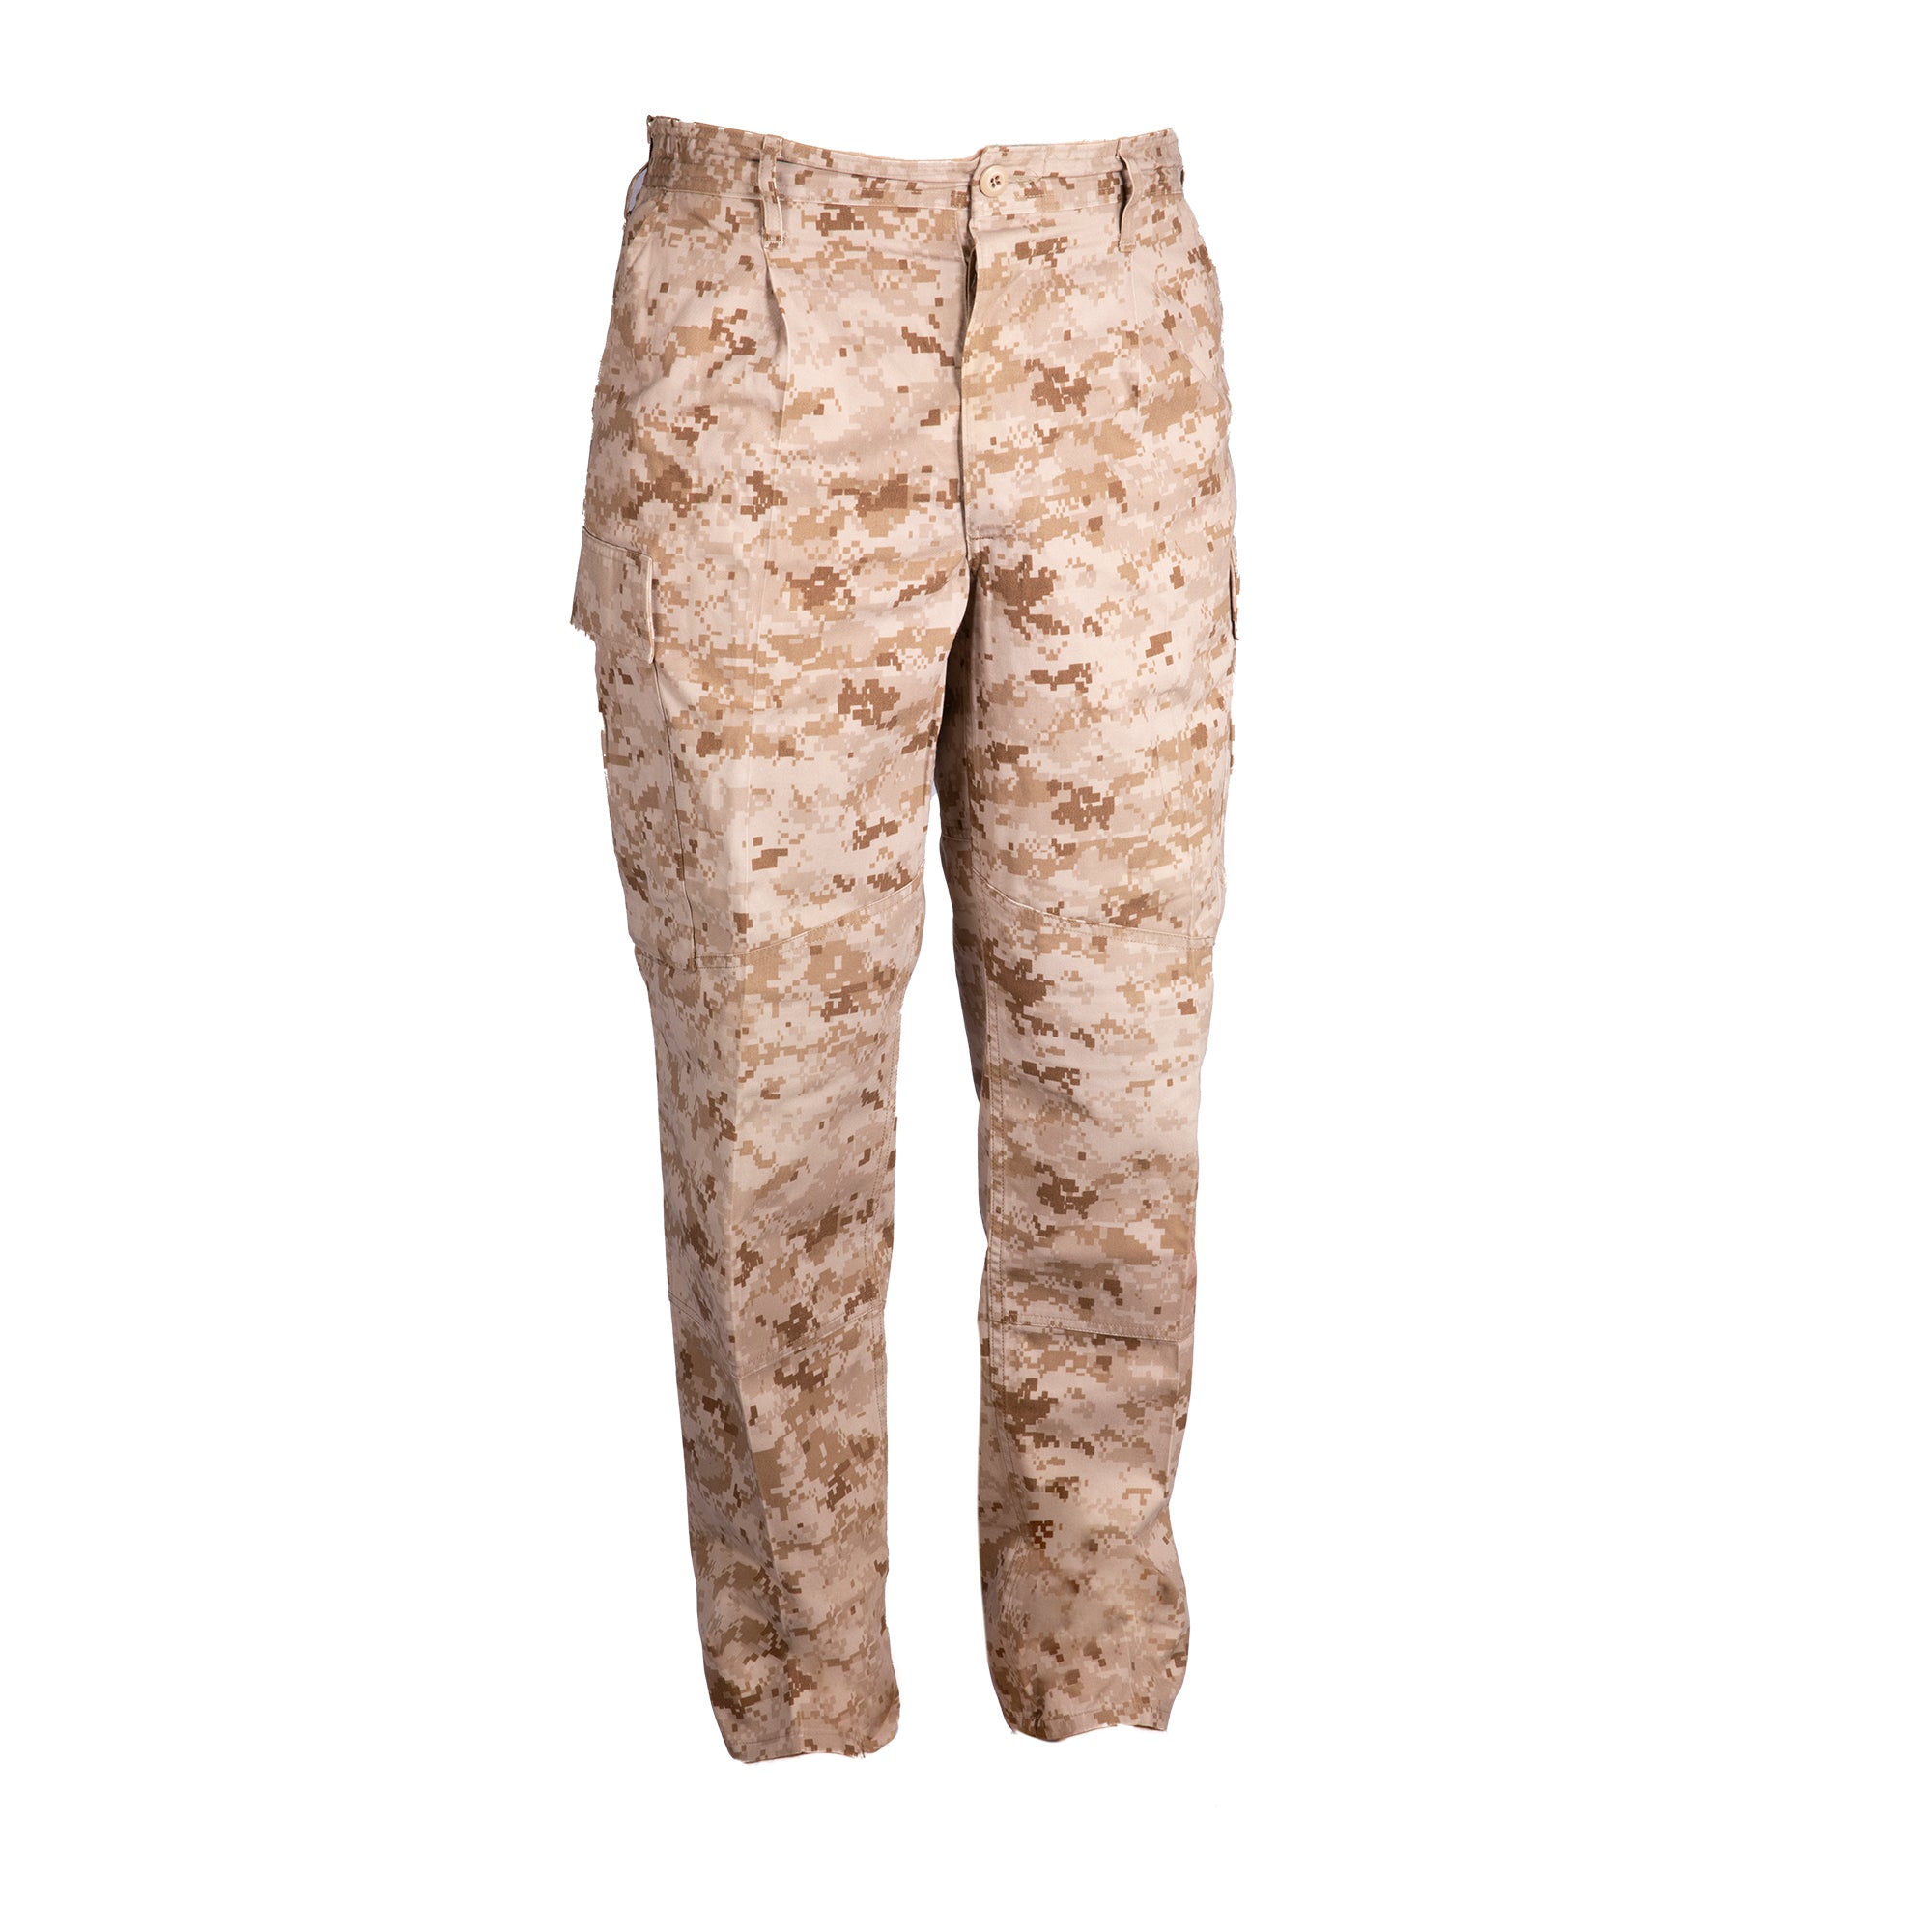 Marine Corps Marpat Mccuu Digital Desert Camo Pants Uniform Trading Company - tri desert camo roblox texture